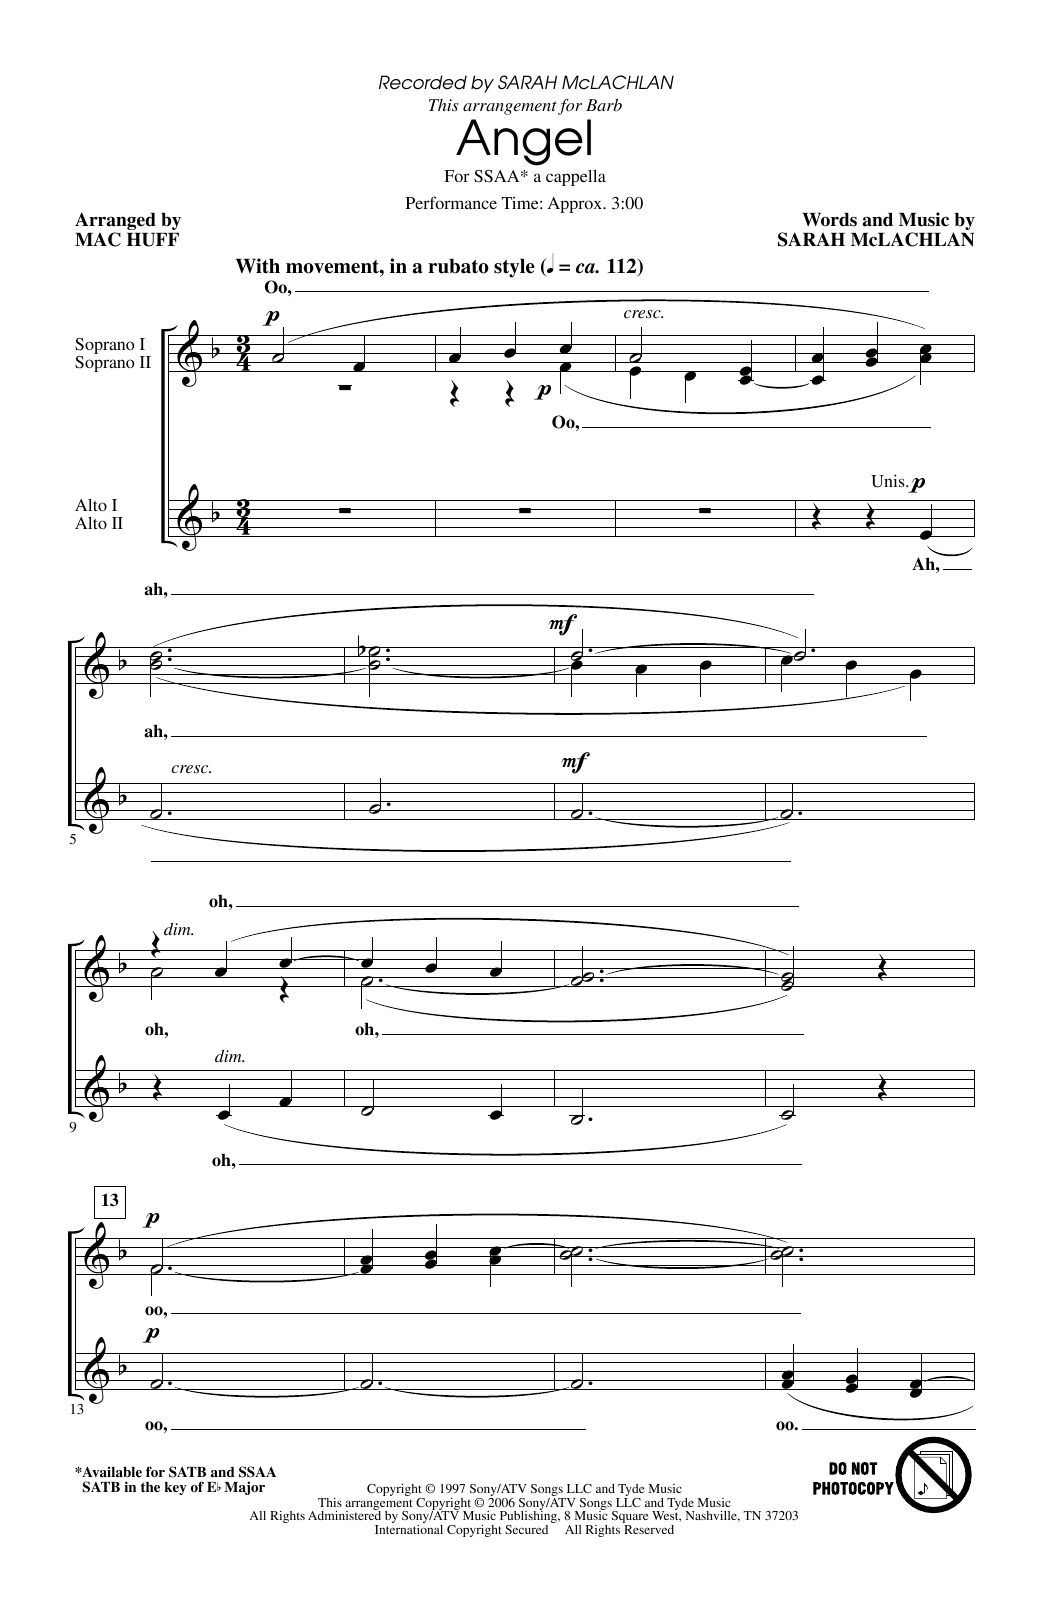 Sarah McLachlan Angel (arr. Mac Huff) Sheet Music Notes & Chords for SSA Choir - Download or Print PDF